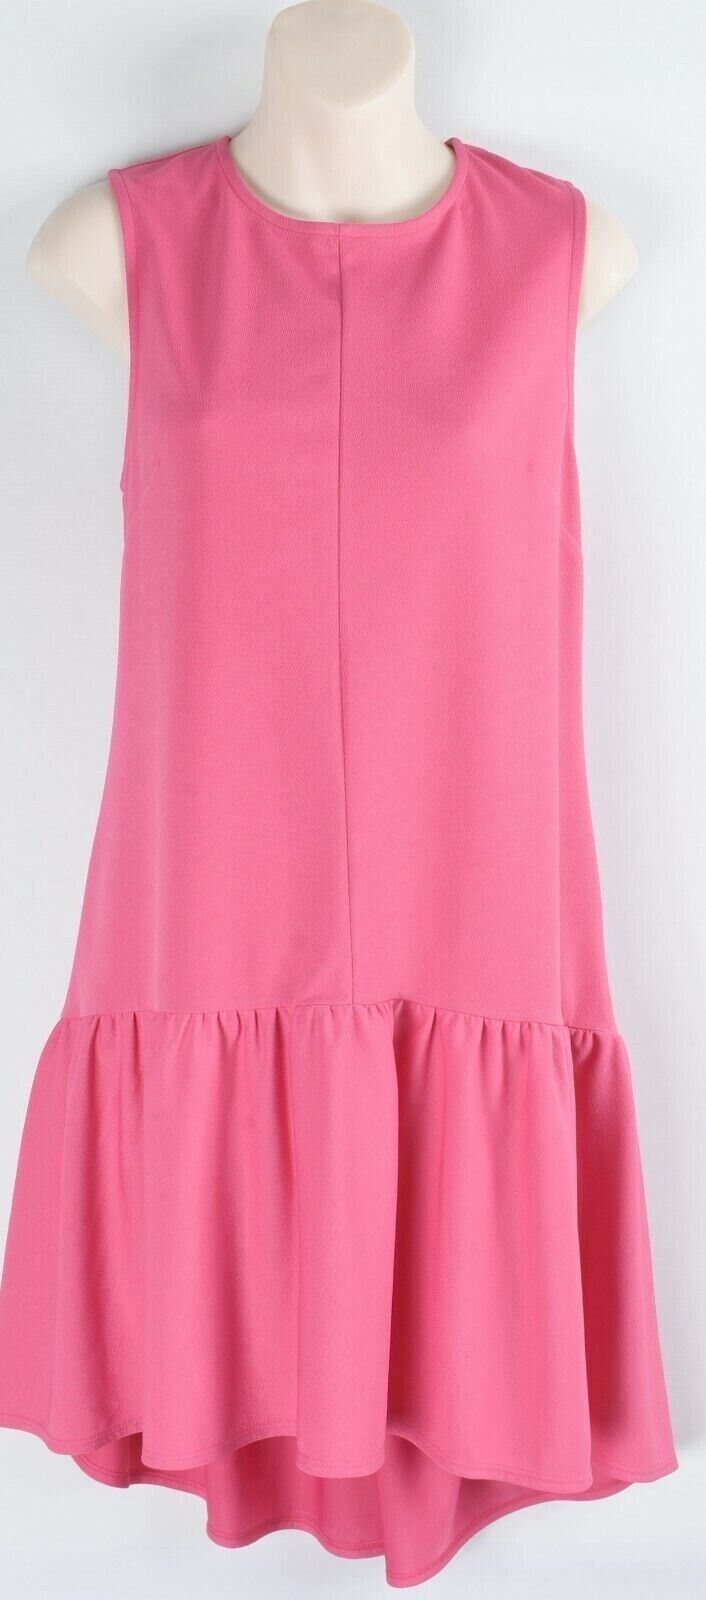 MISS SELFRIDGE Womens Frill Hem Dress, Hot Pink, size UK 12